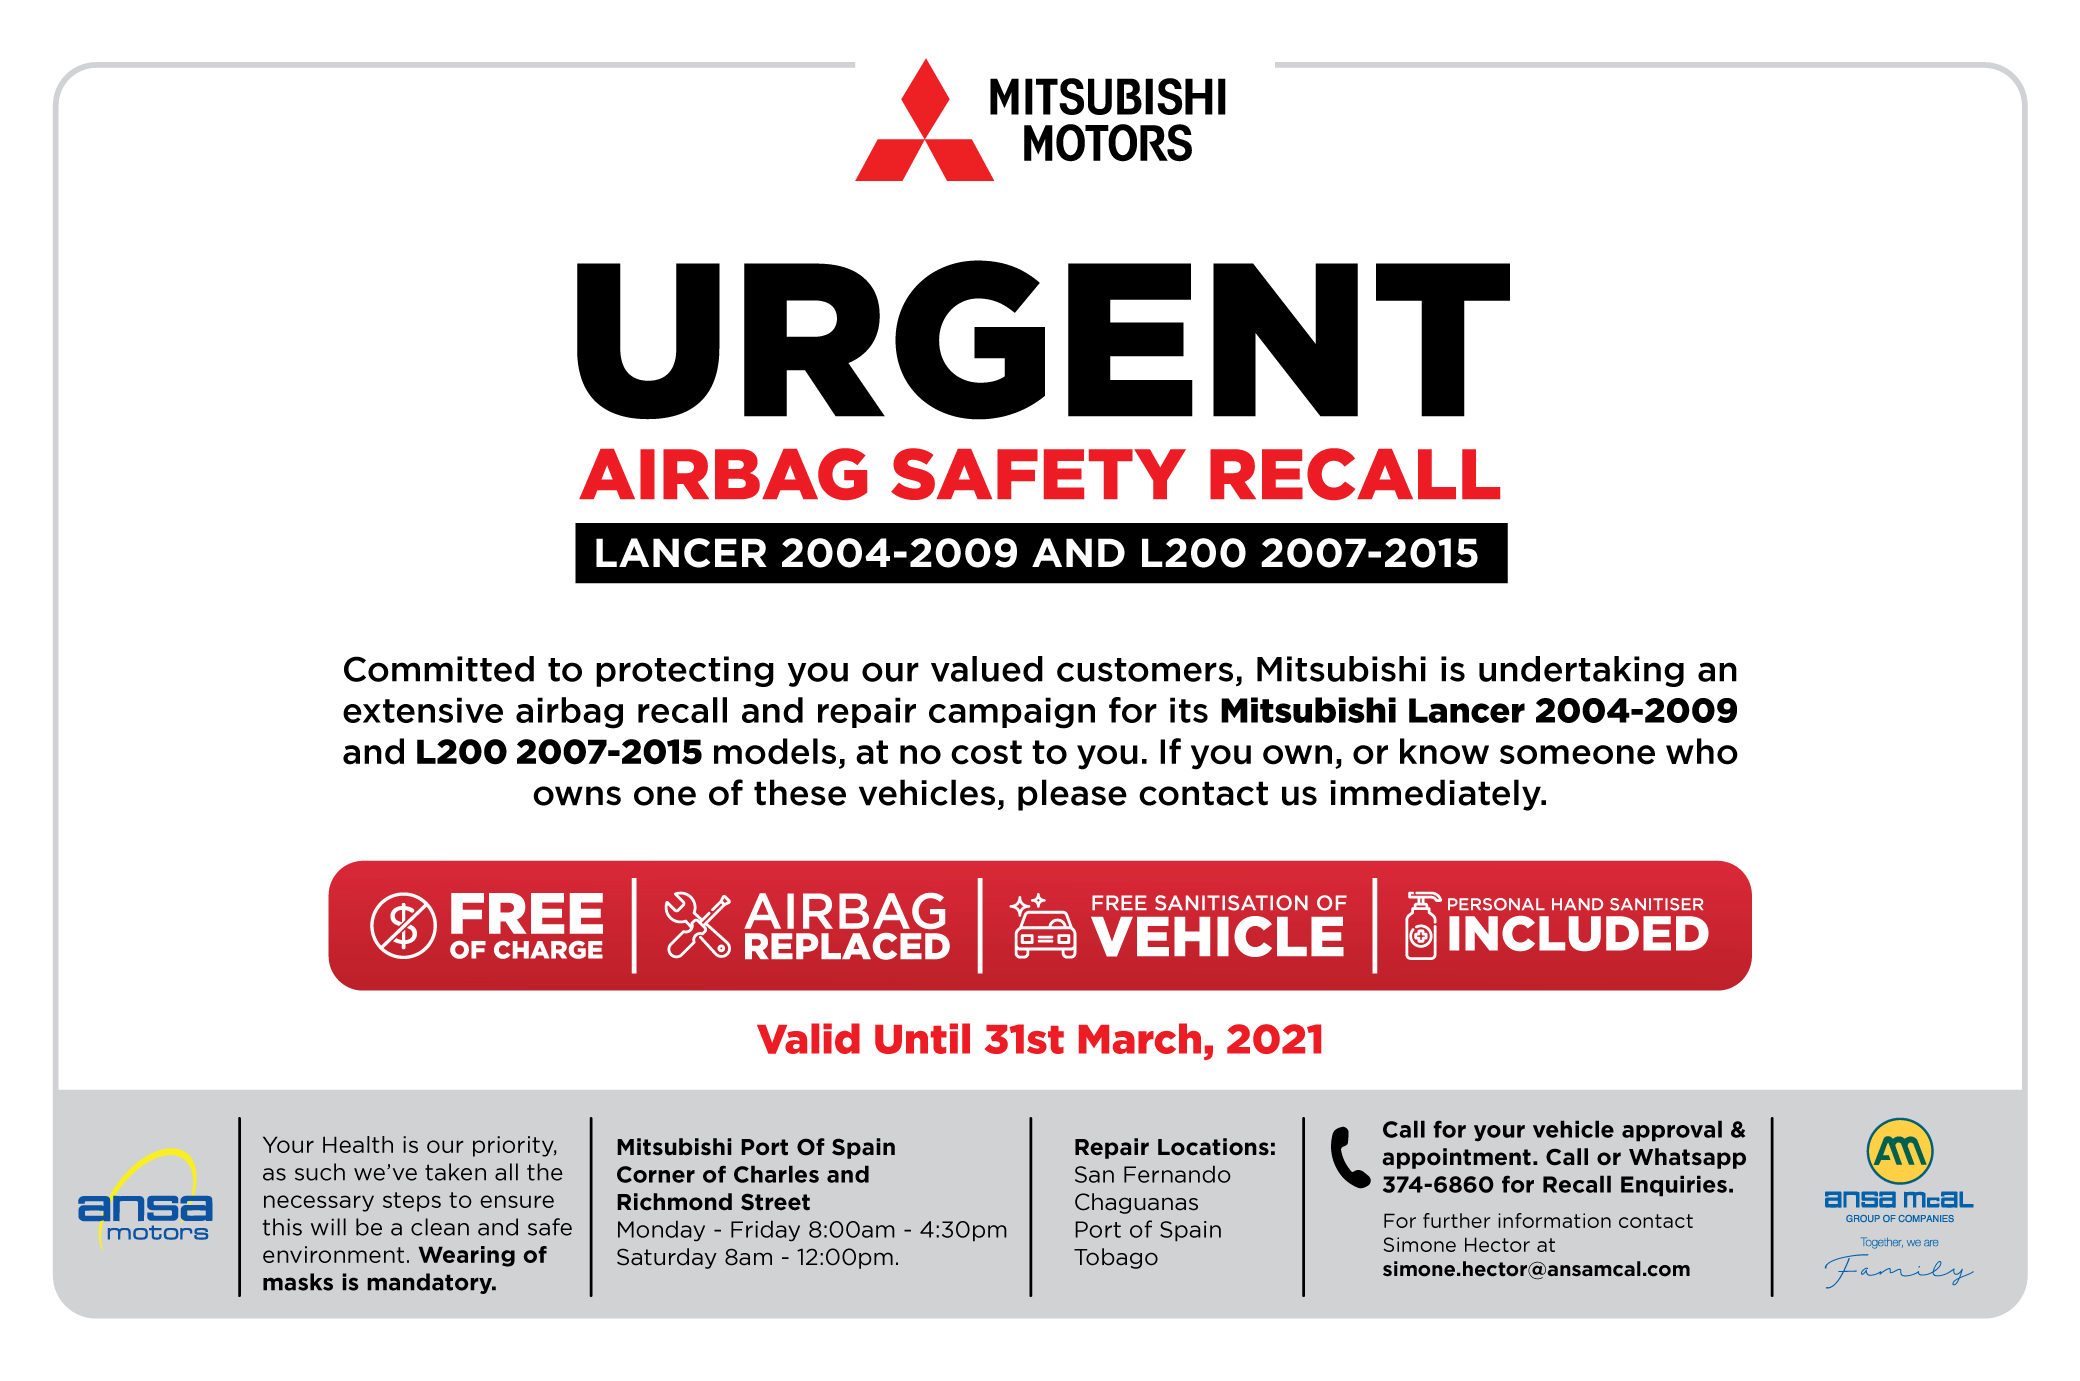 Mitsubishi Urgent Airbag Safety Recall